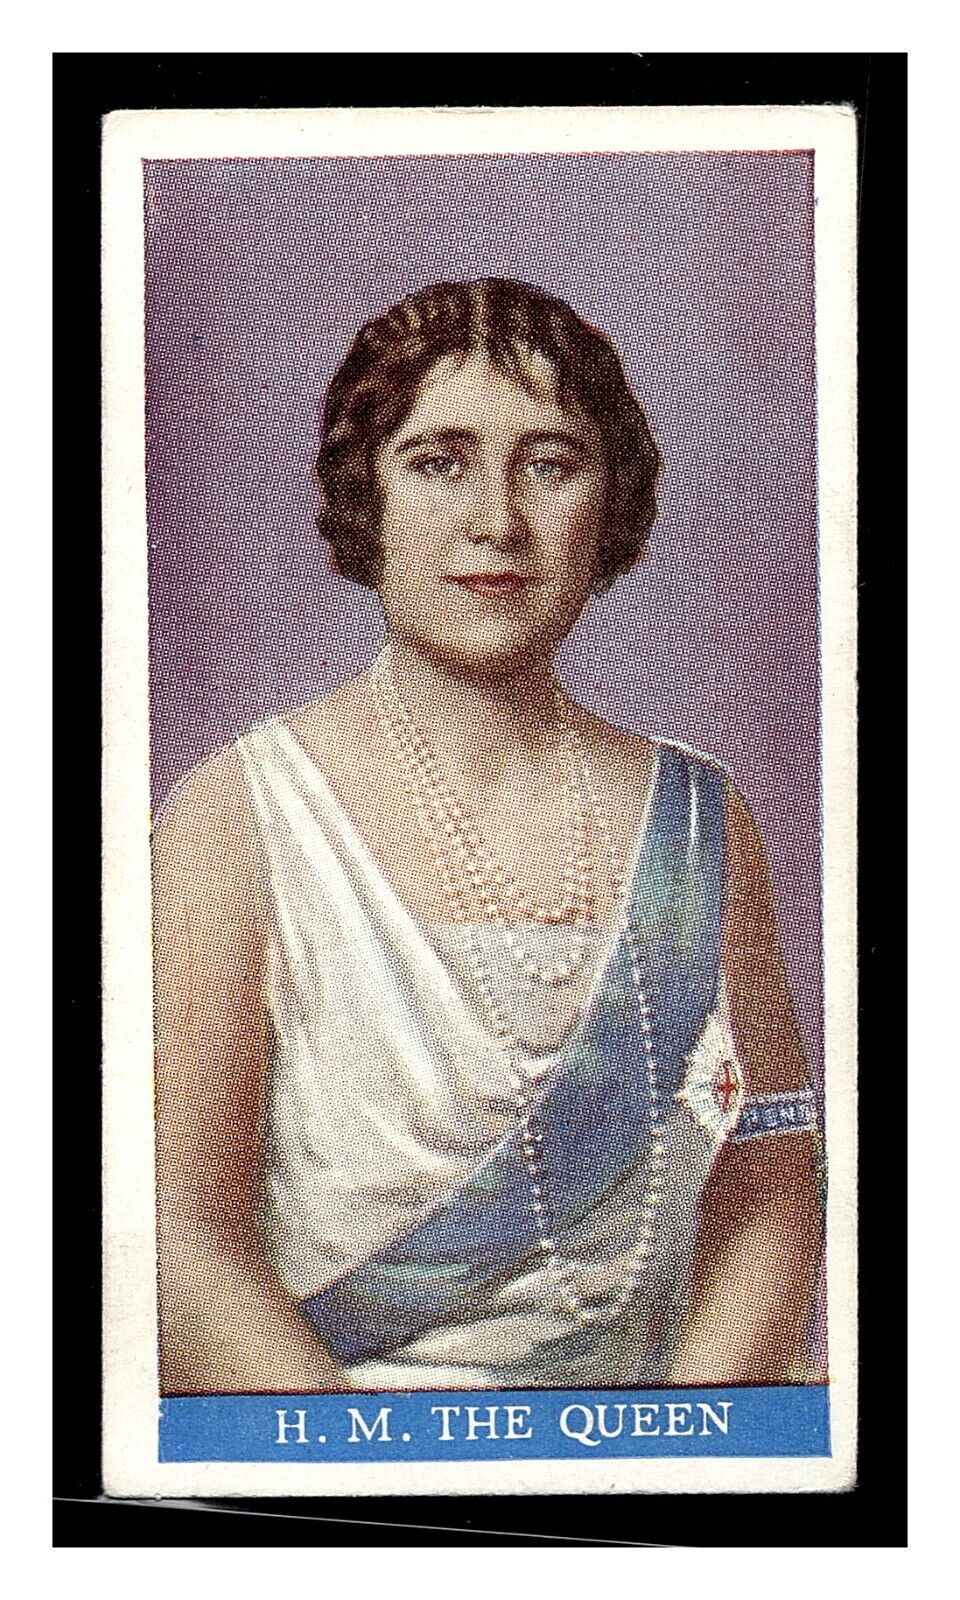 H.M. THE QUEEN #32 LADY ELIZABETH CORONATION MAJESTIES 1937 GODFREY PHILLIPS